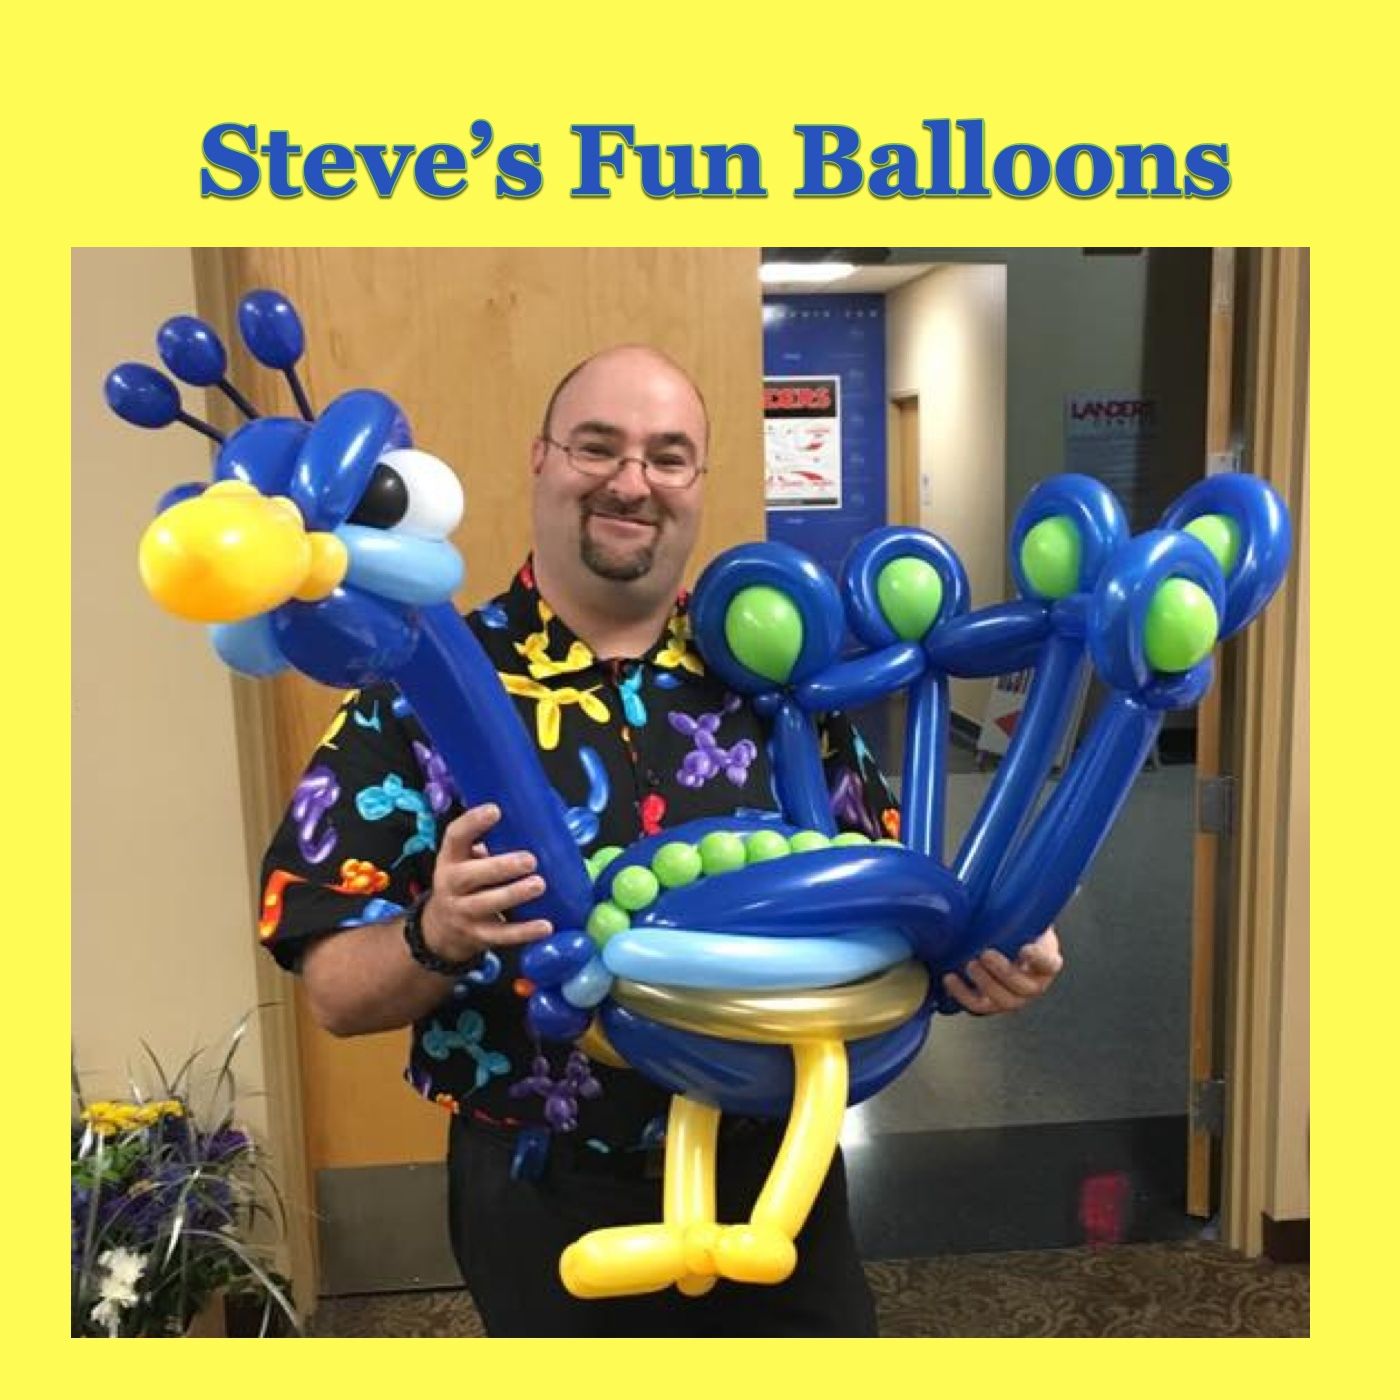 CoolKay interviews Steve Rosen 0f Steves Fun Balloons